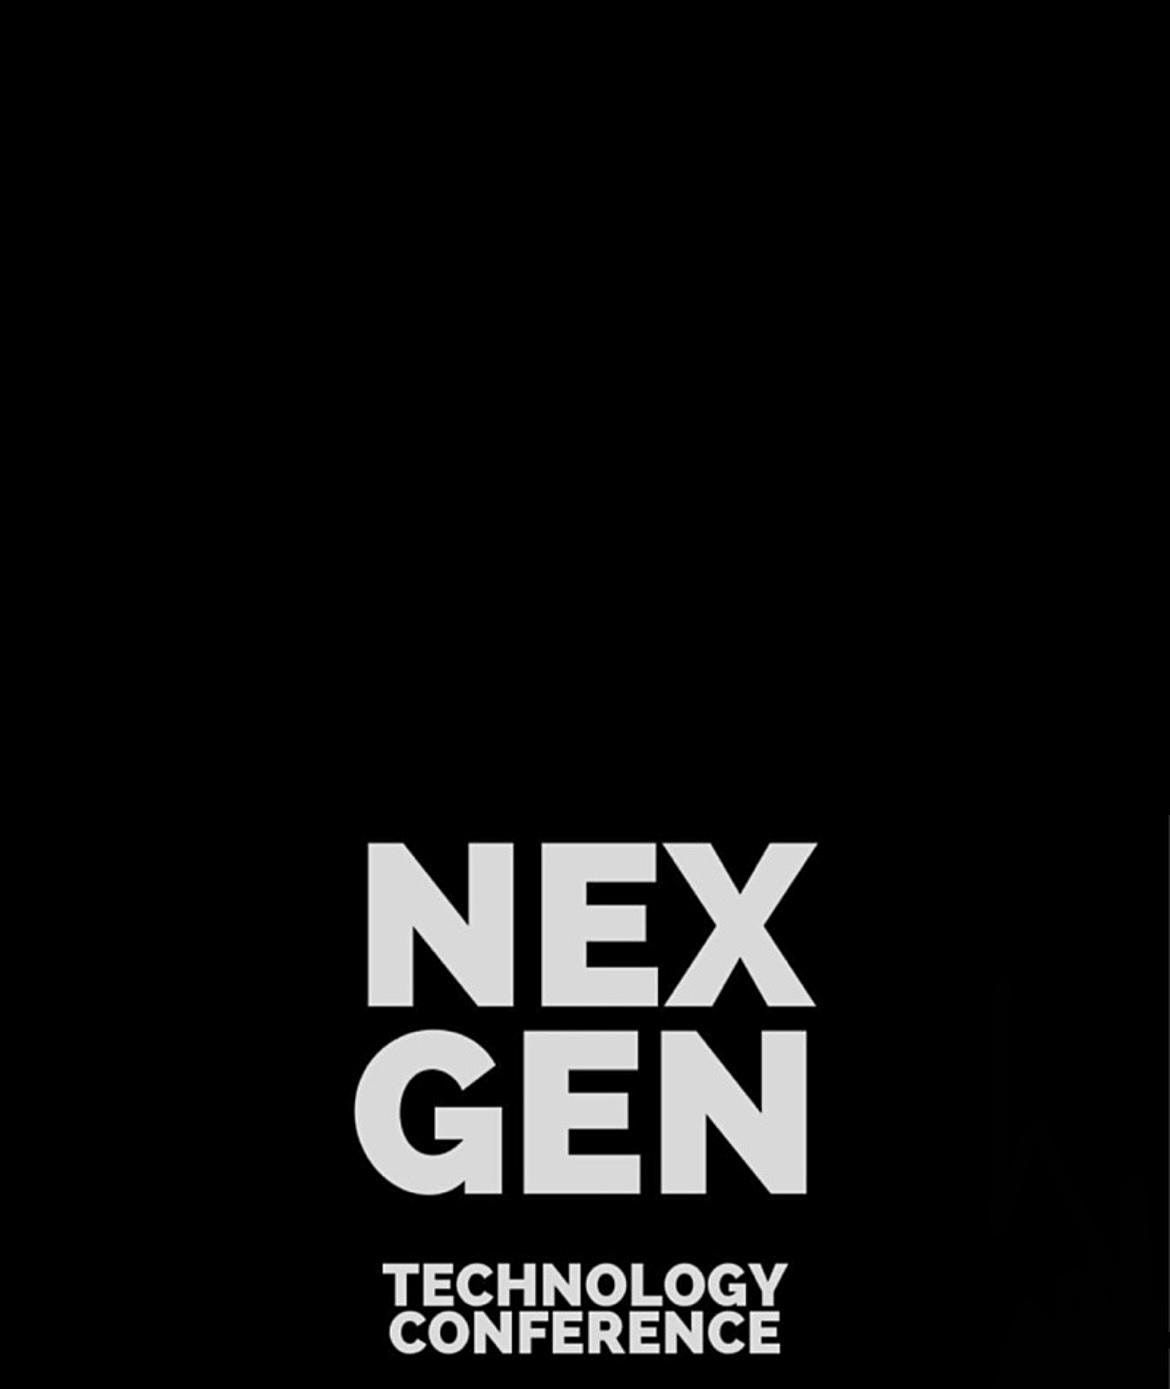 NexGen Technology Conference